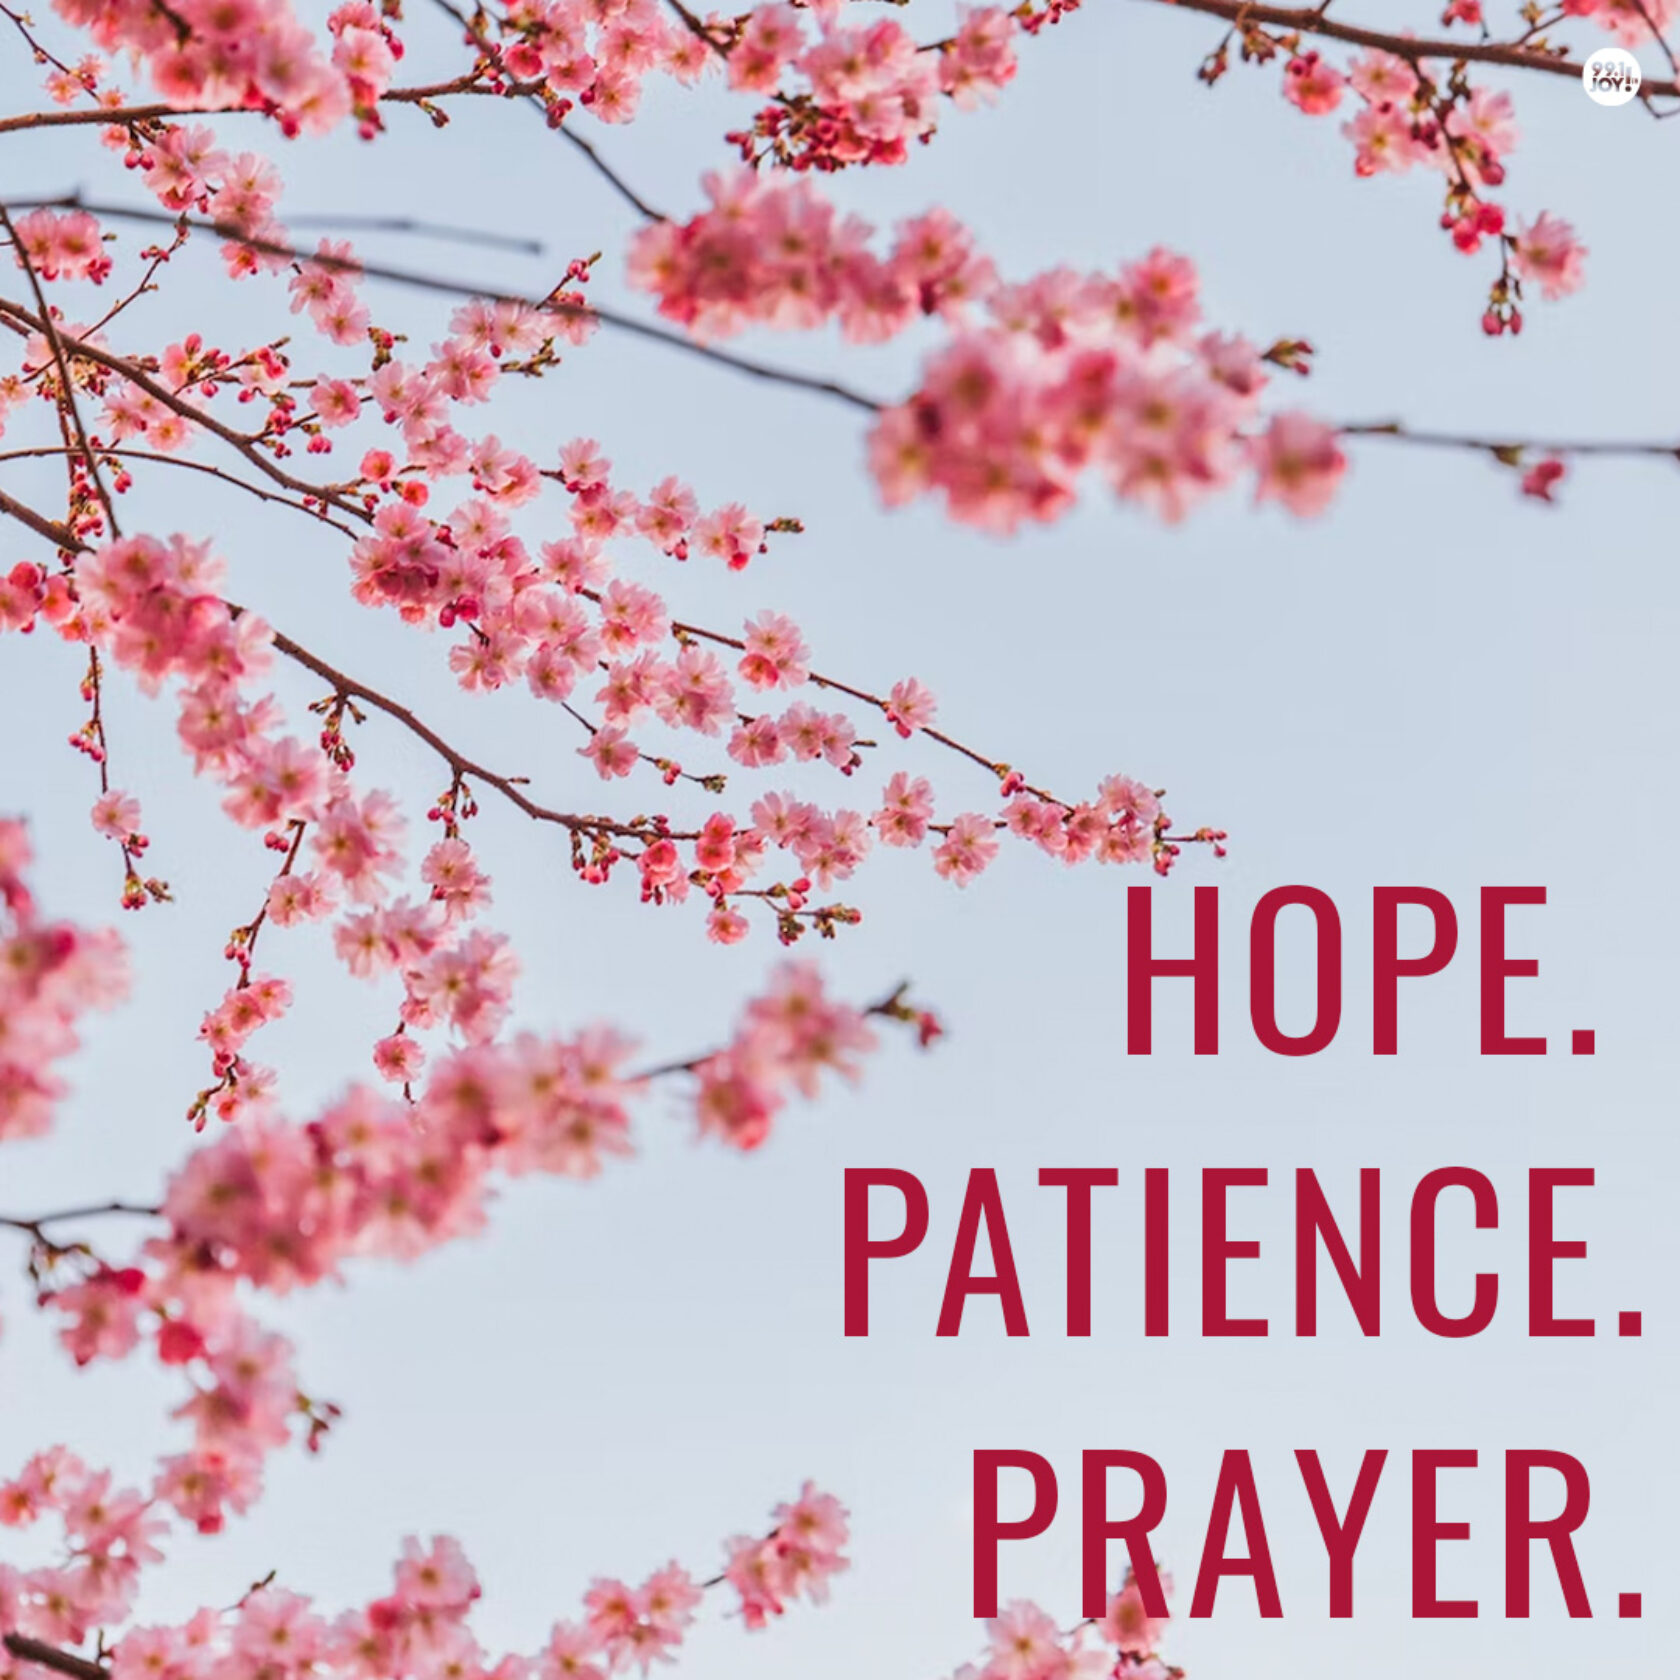 Hope.  Patience.  Prayer.